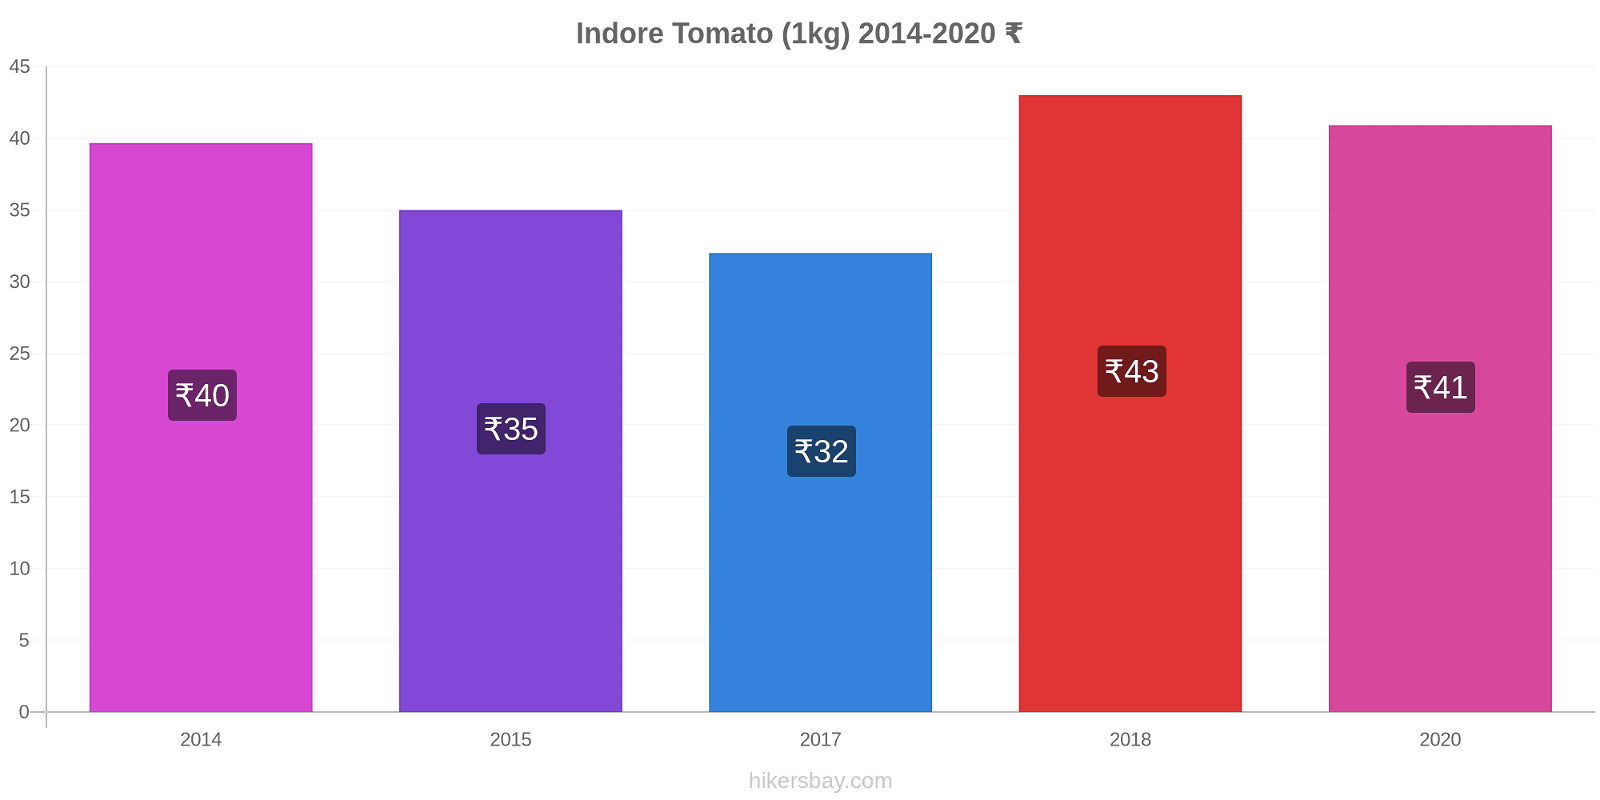 Indore price changes Tomato (1kg) hikersbay.com